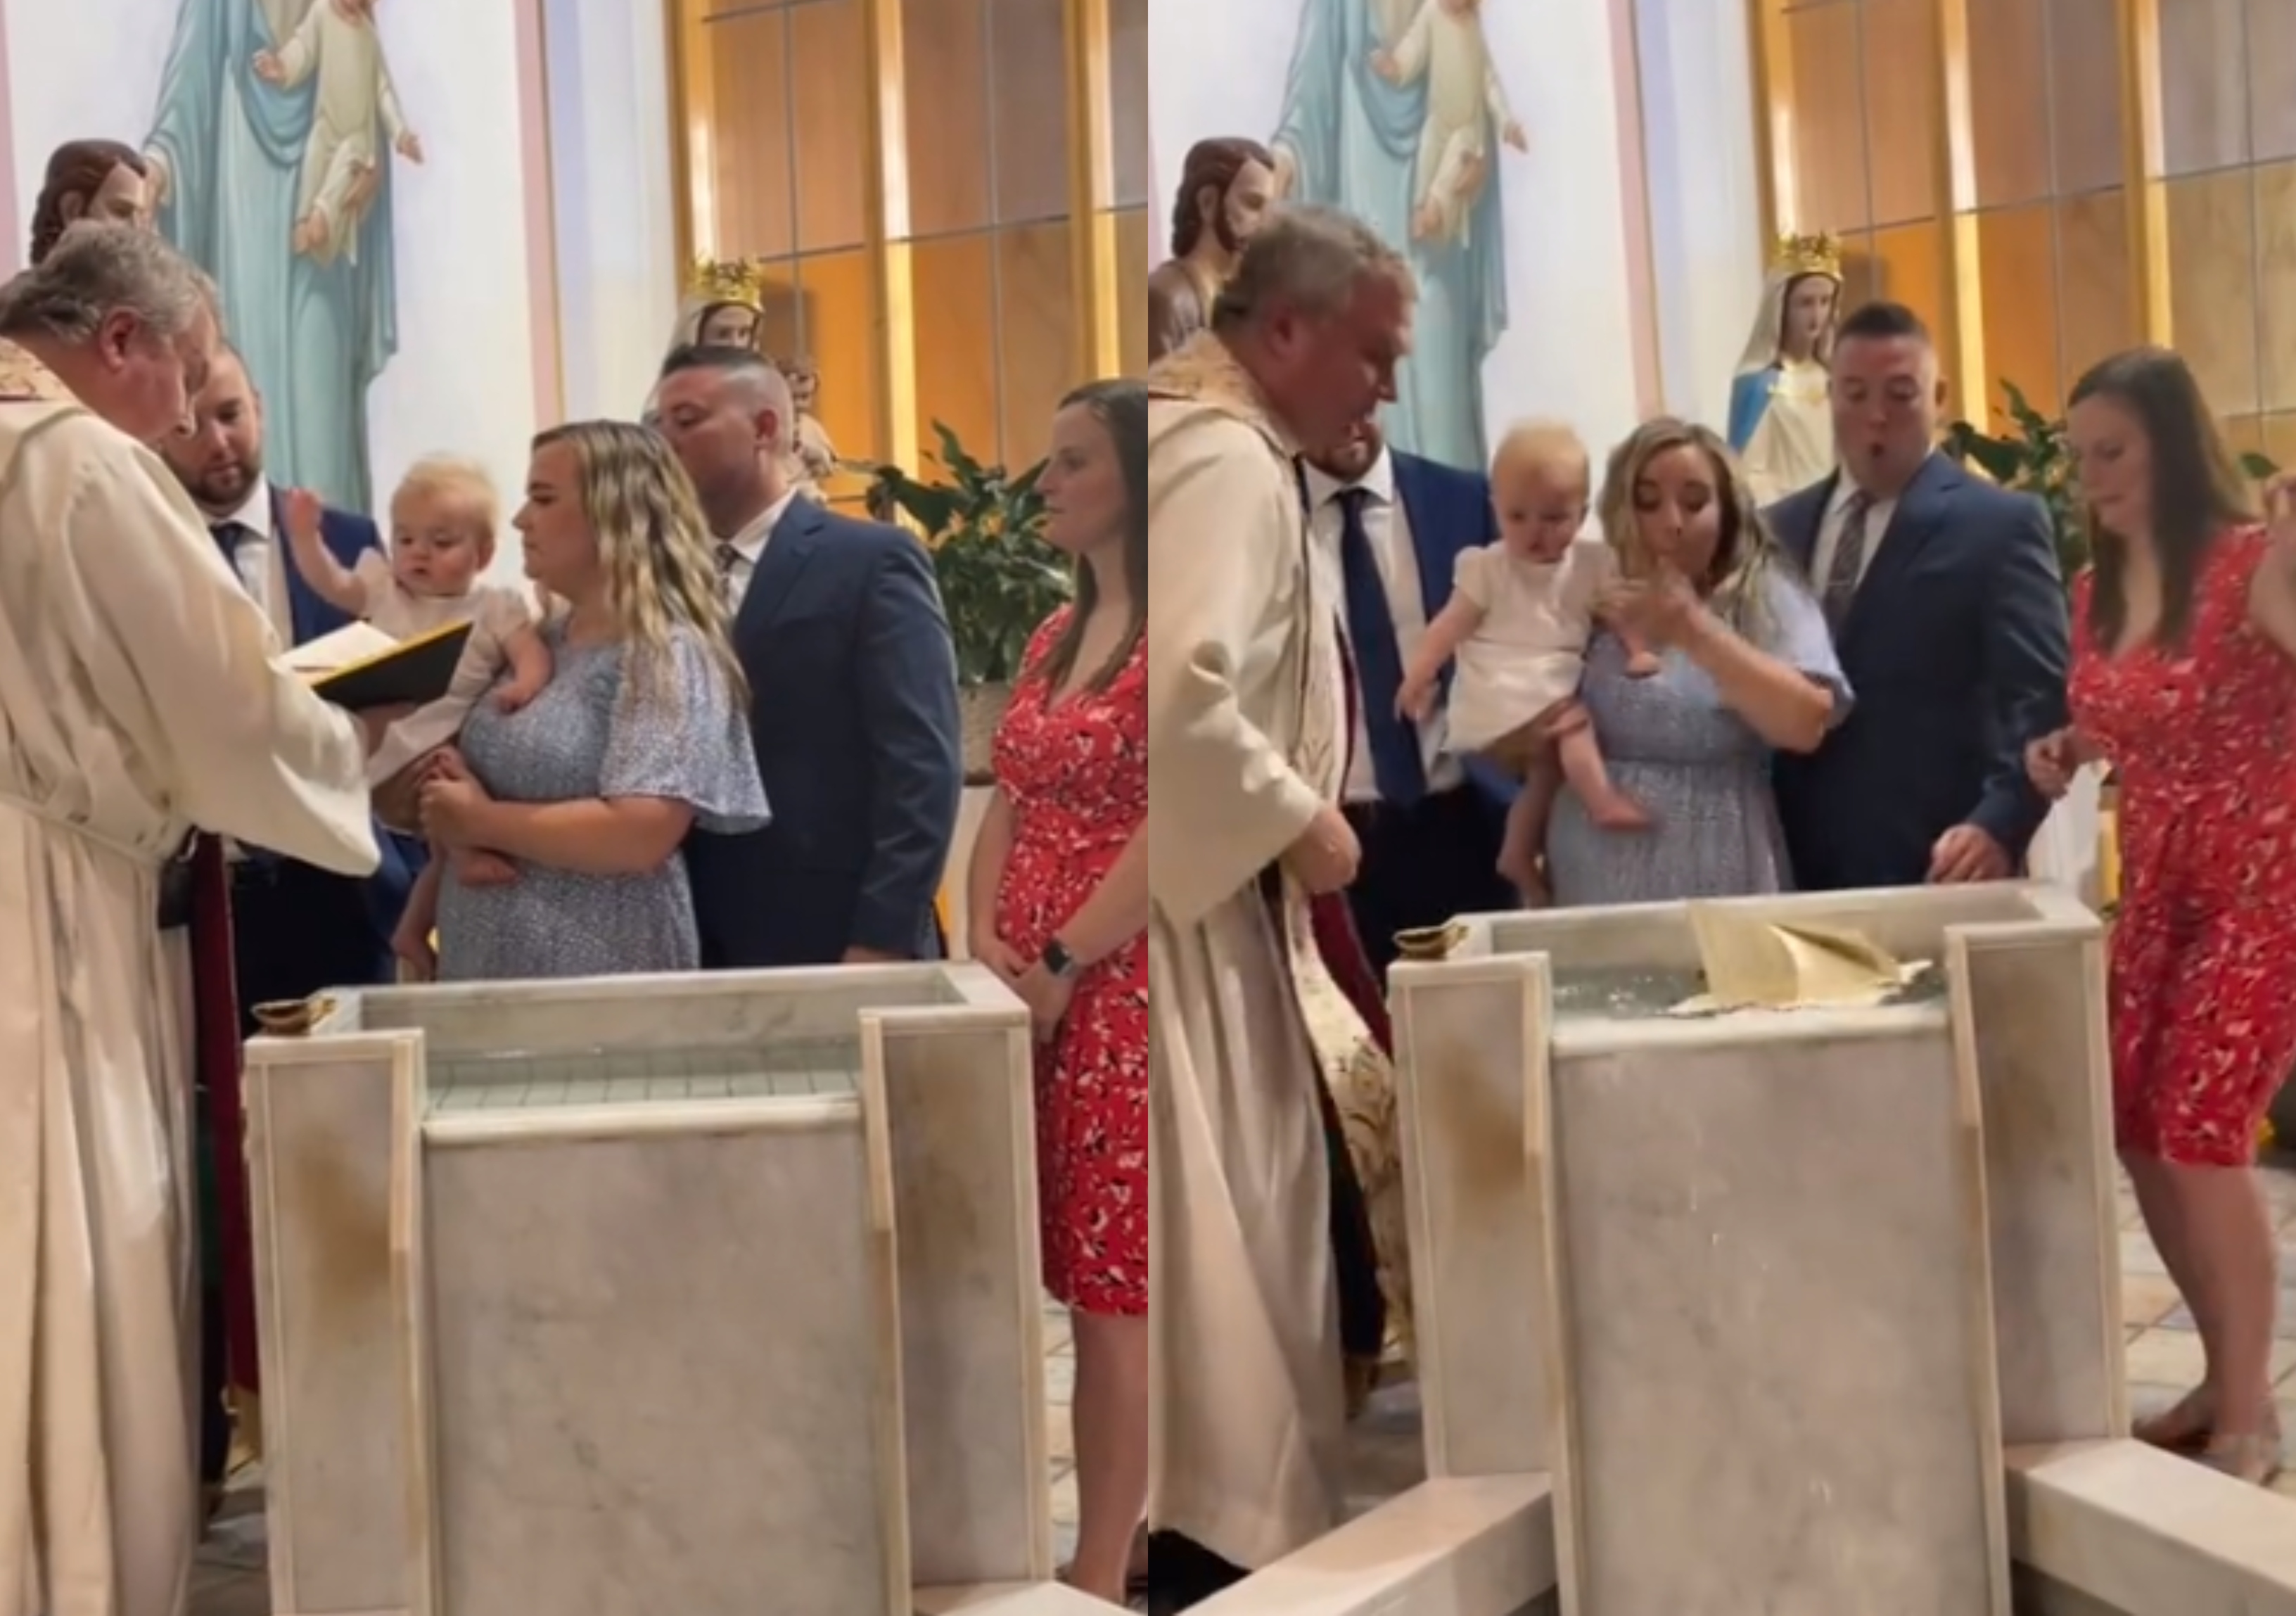 TikTok: Μωρό πέταξε την Βίβλο στην κολυμπήθρα ενώ το βάπτιζαν και έγινε viral